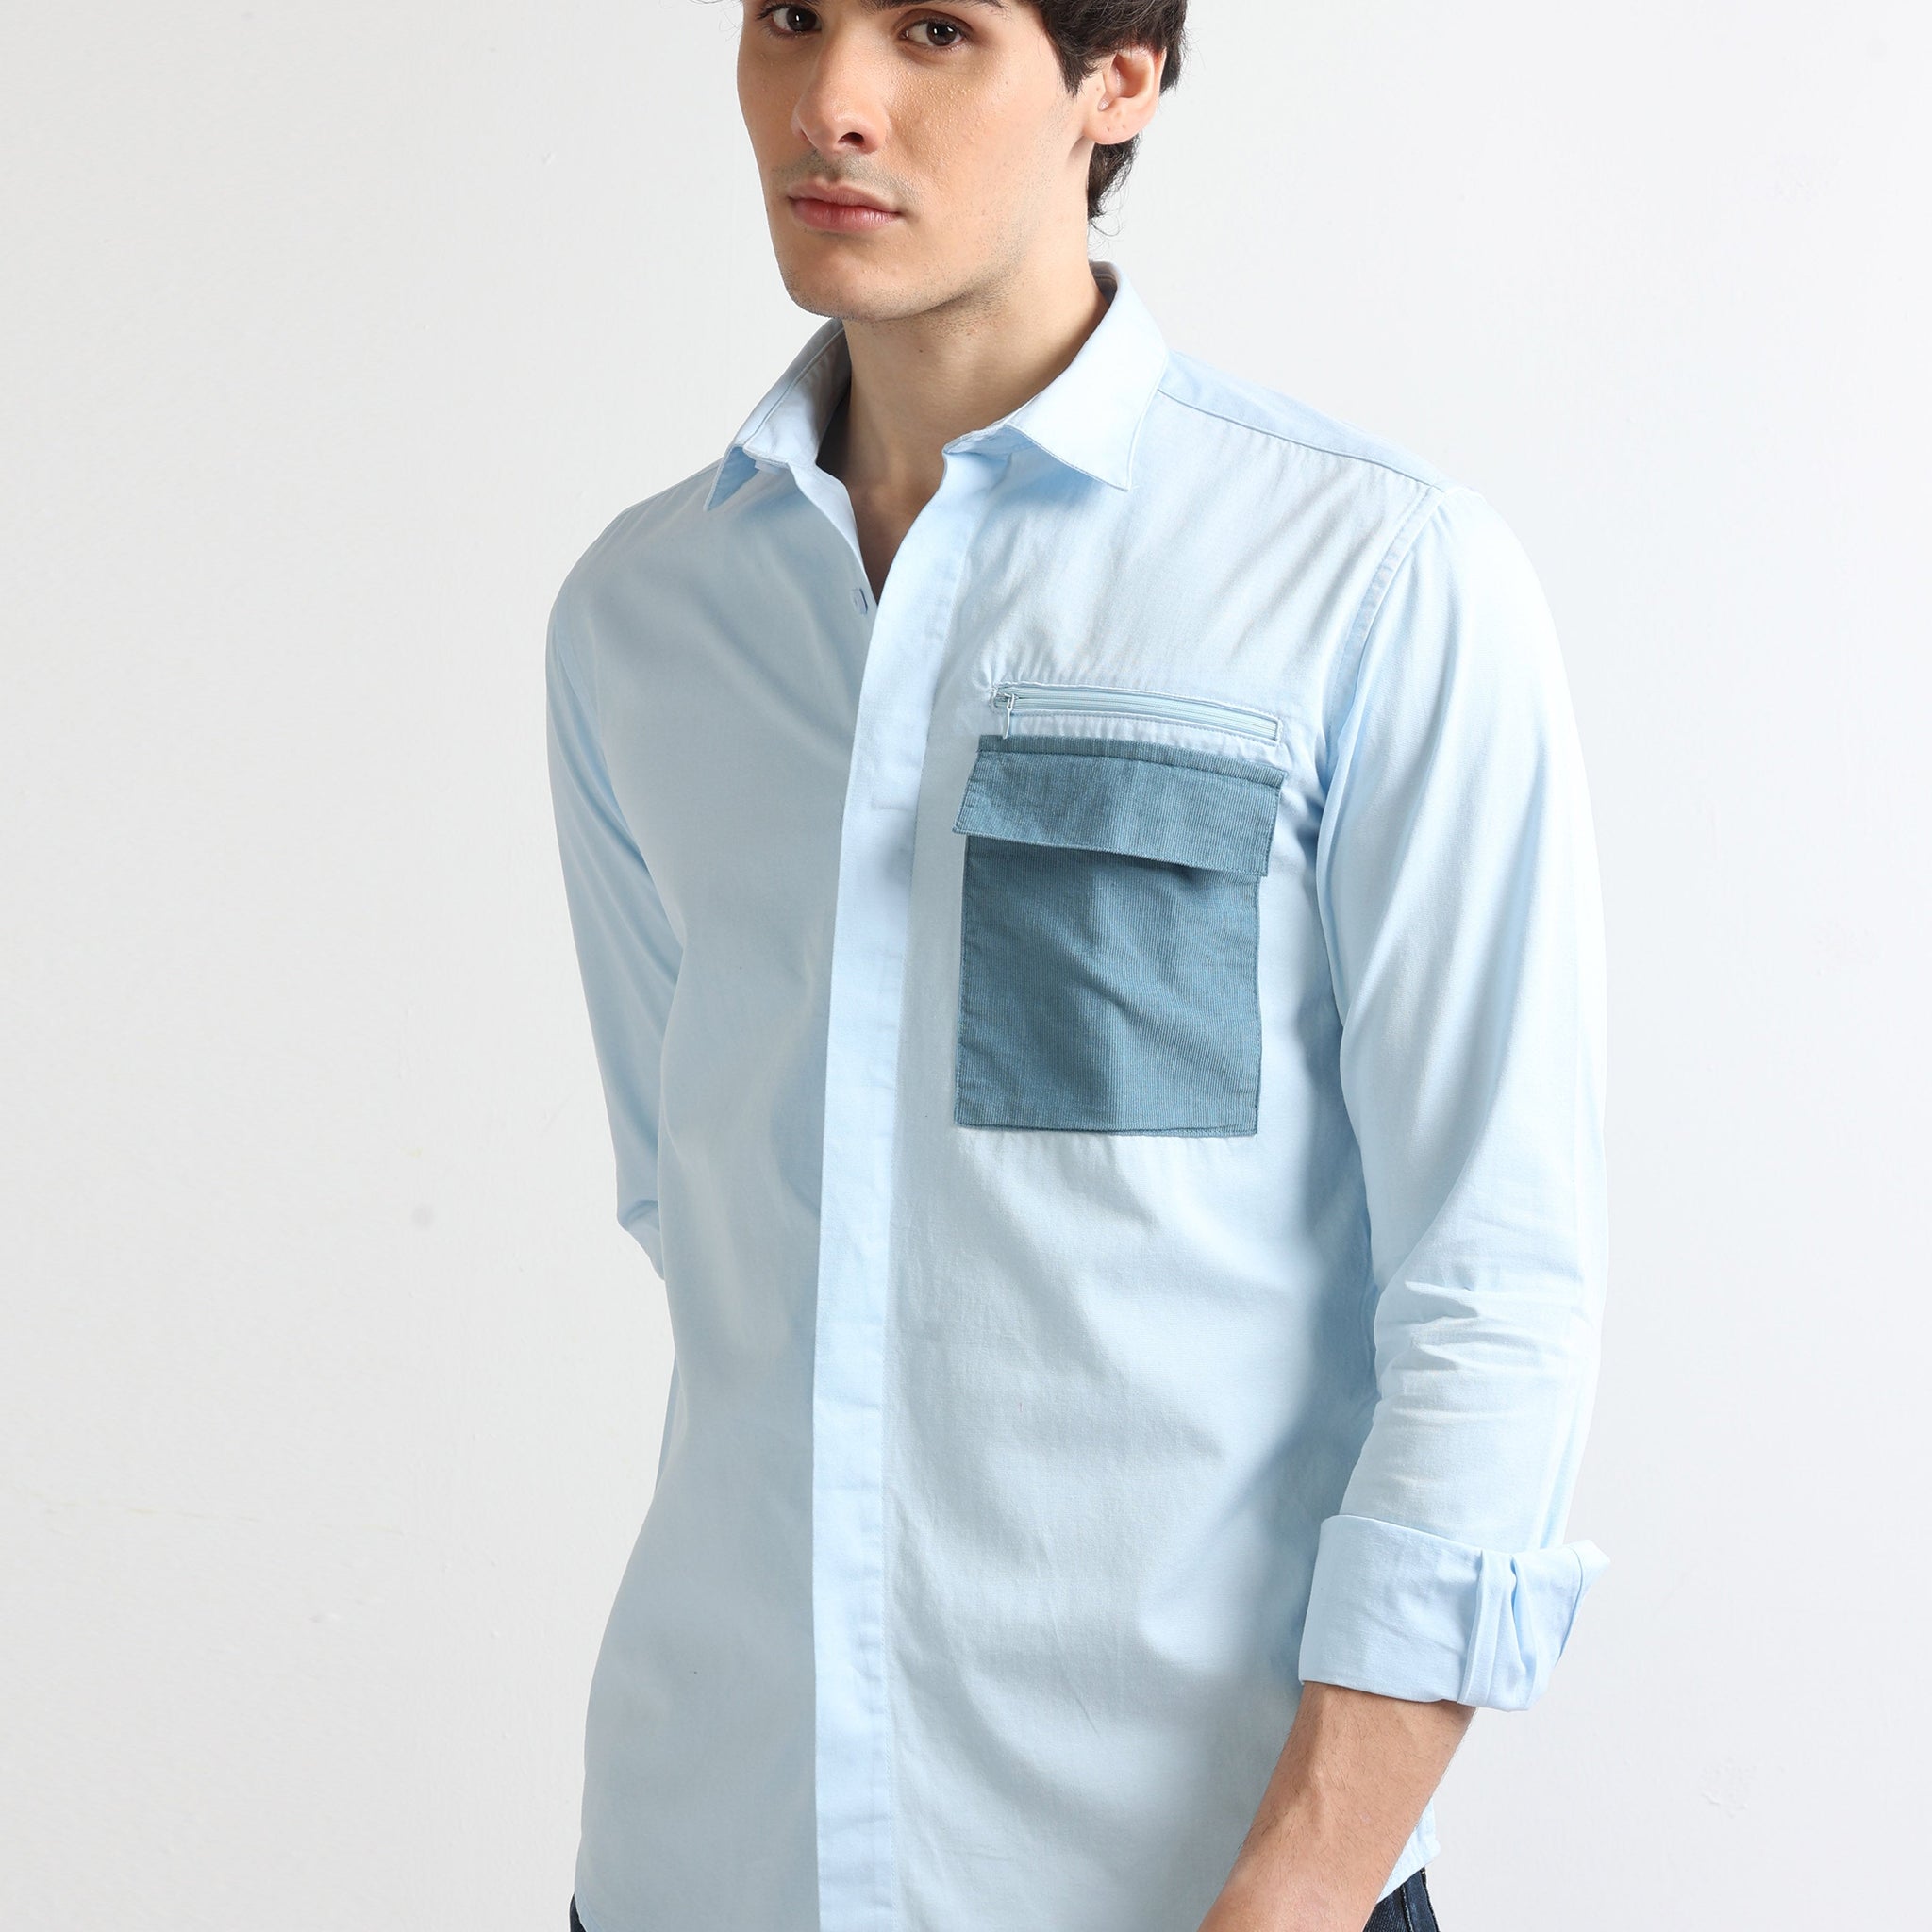 Sky Blue Men's Stylish with Hidden pocket Shirt